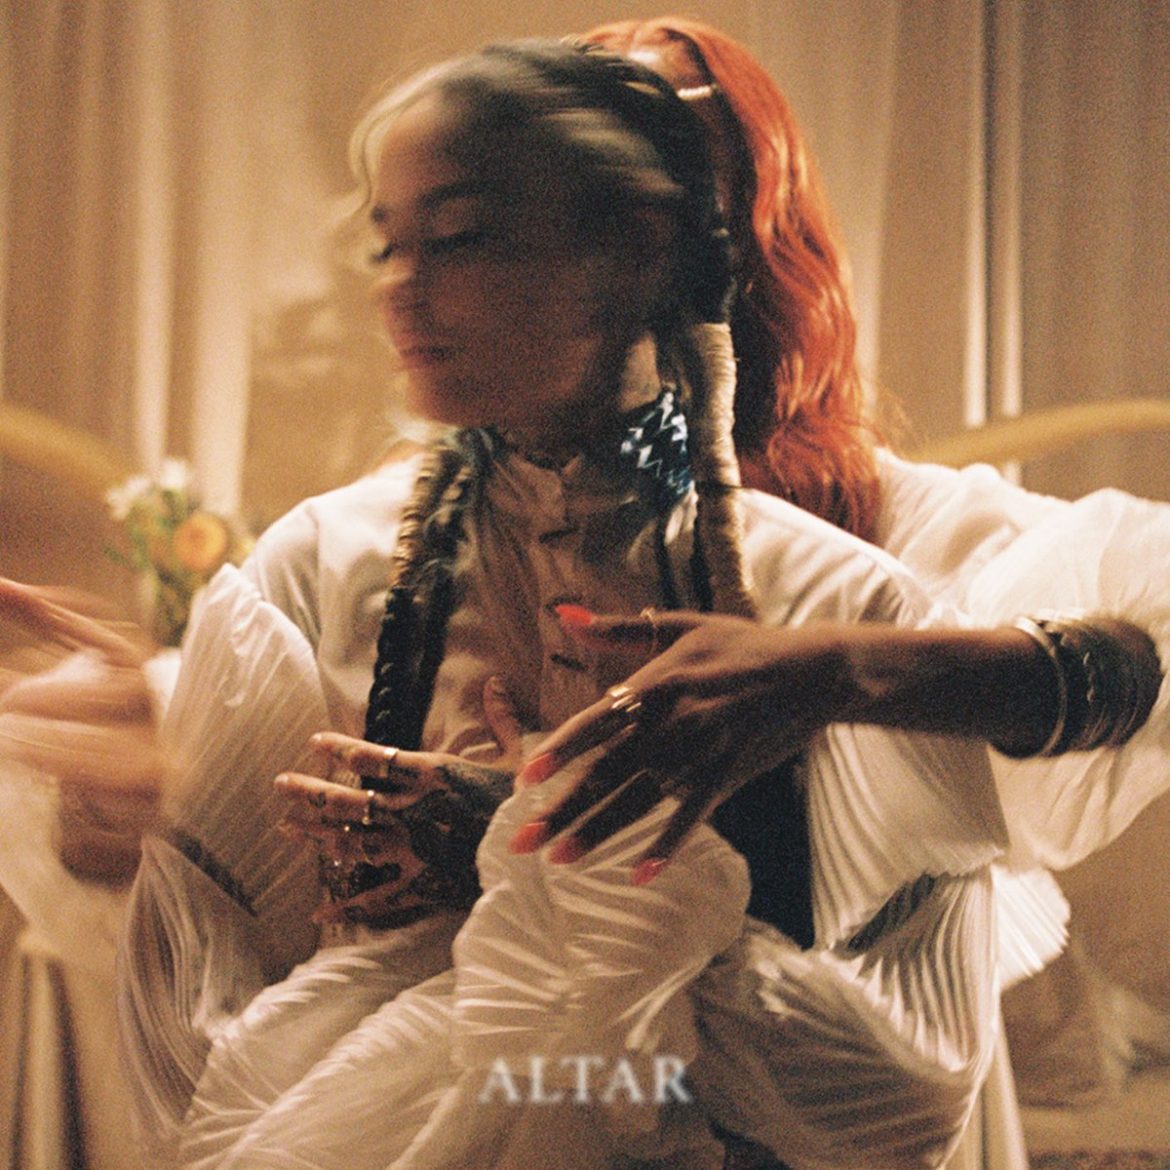 Kehlani Releases “Altar” Single | 2DOPEBOYZ